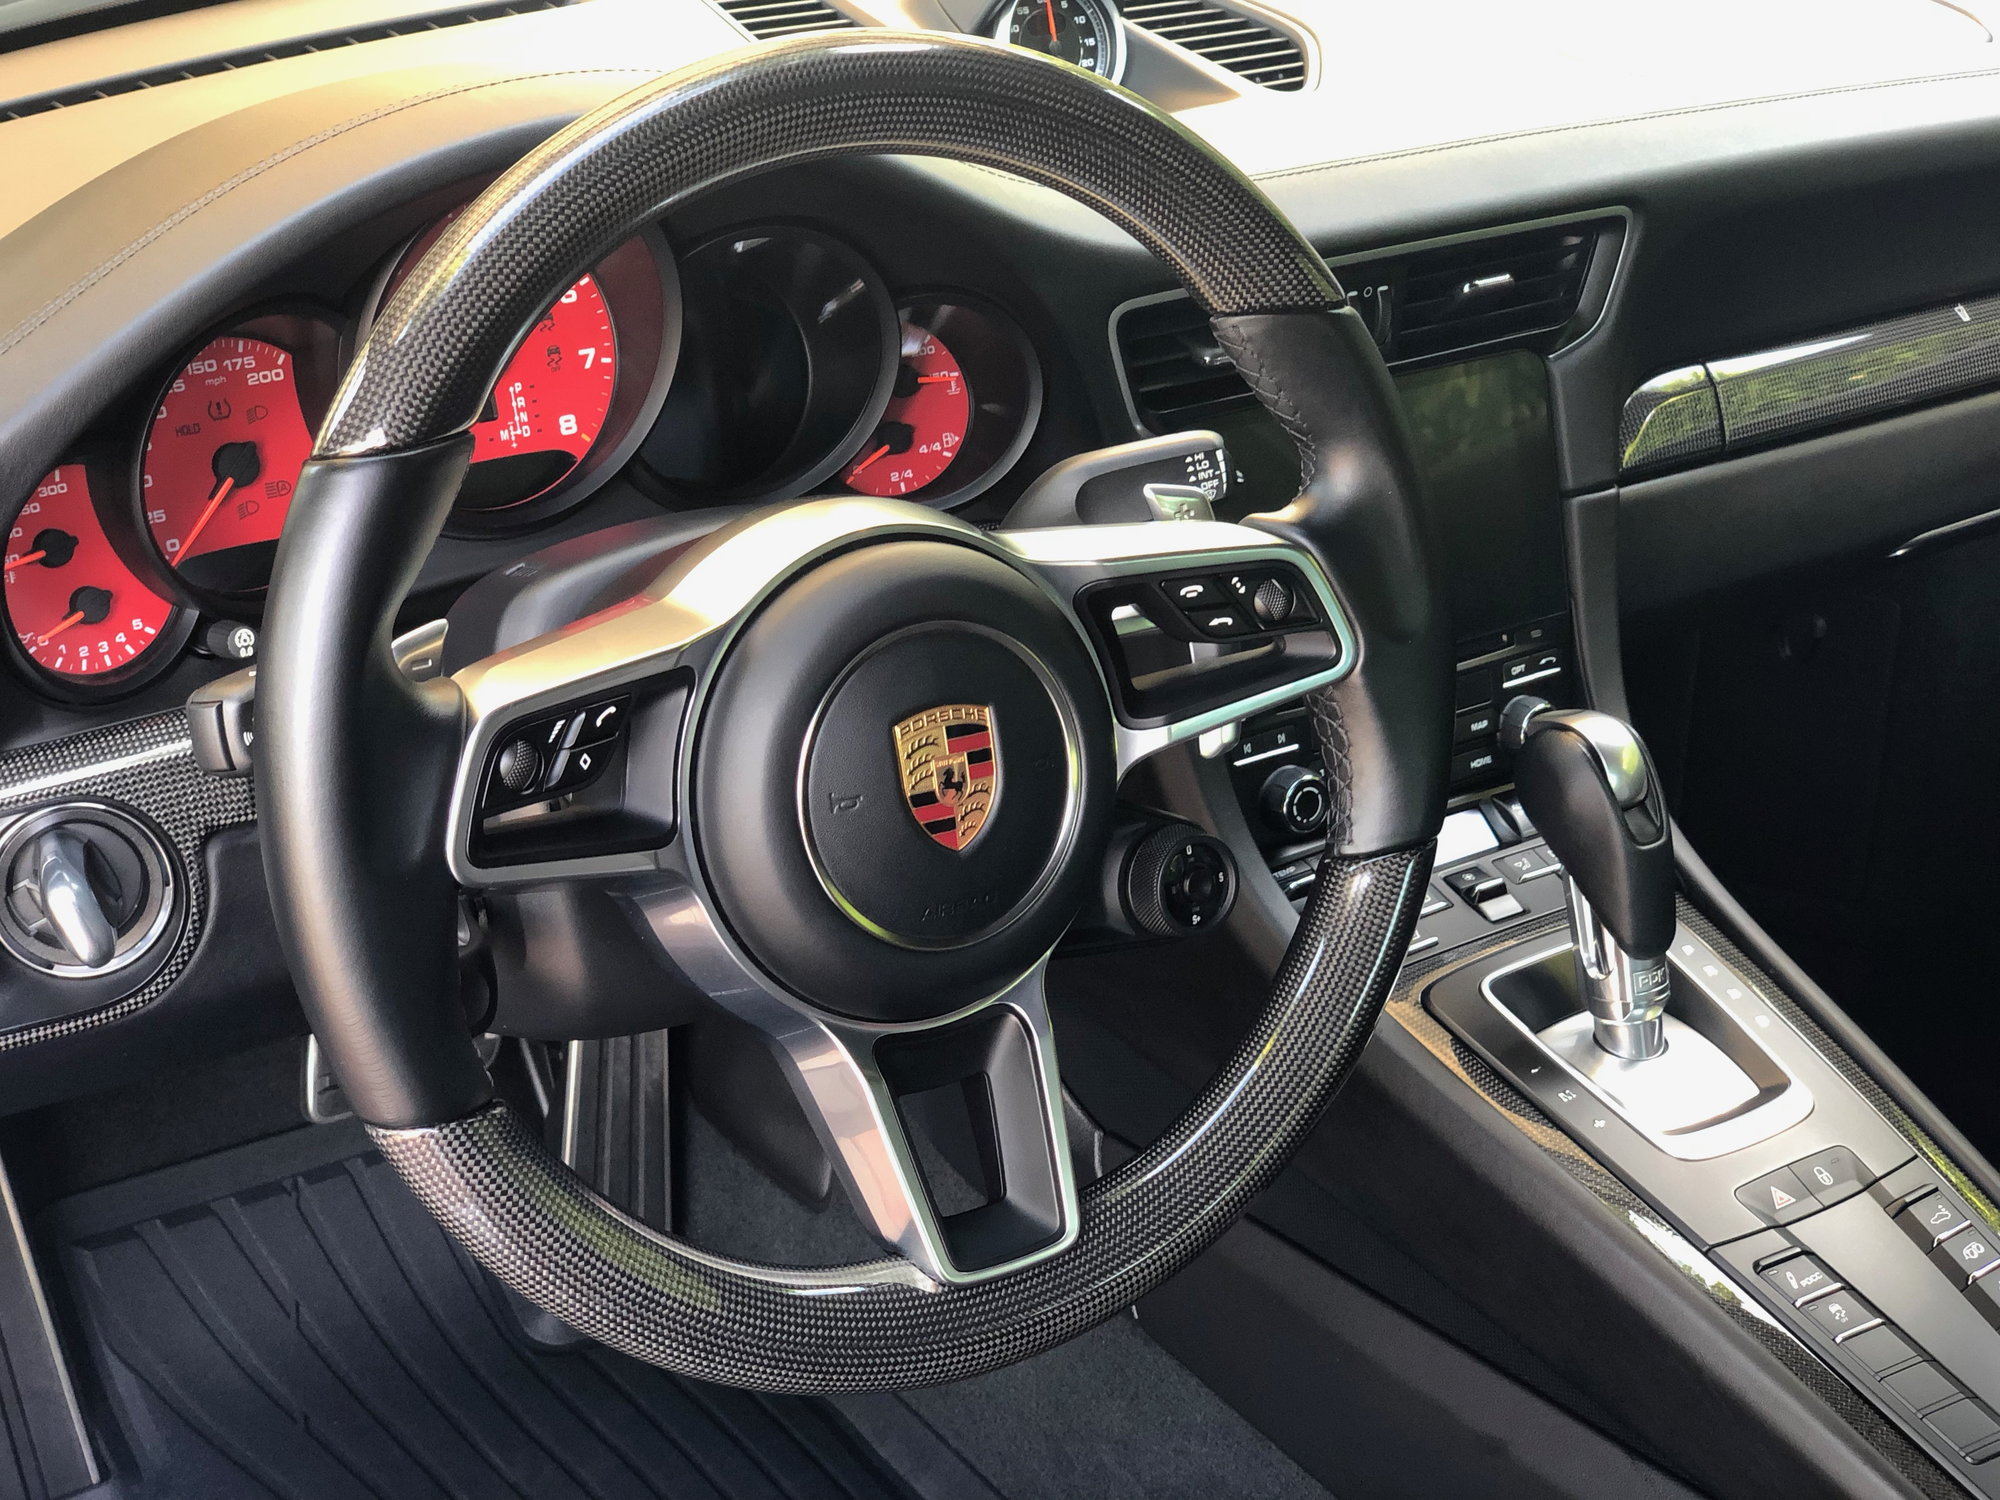 Interior/Upholstery - 991.2/718 Steering Wheel in Carbon Fiber - Used - 2017 to 2019 Porsche 911 - 2017 to 2019 Porsche 718 Boxster - 2017 to 2019 Porsche 718 Cayman - Miami Beach, FL 33141, United States